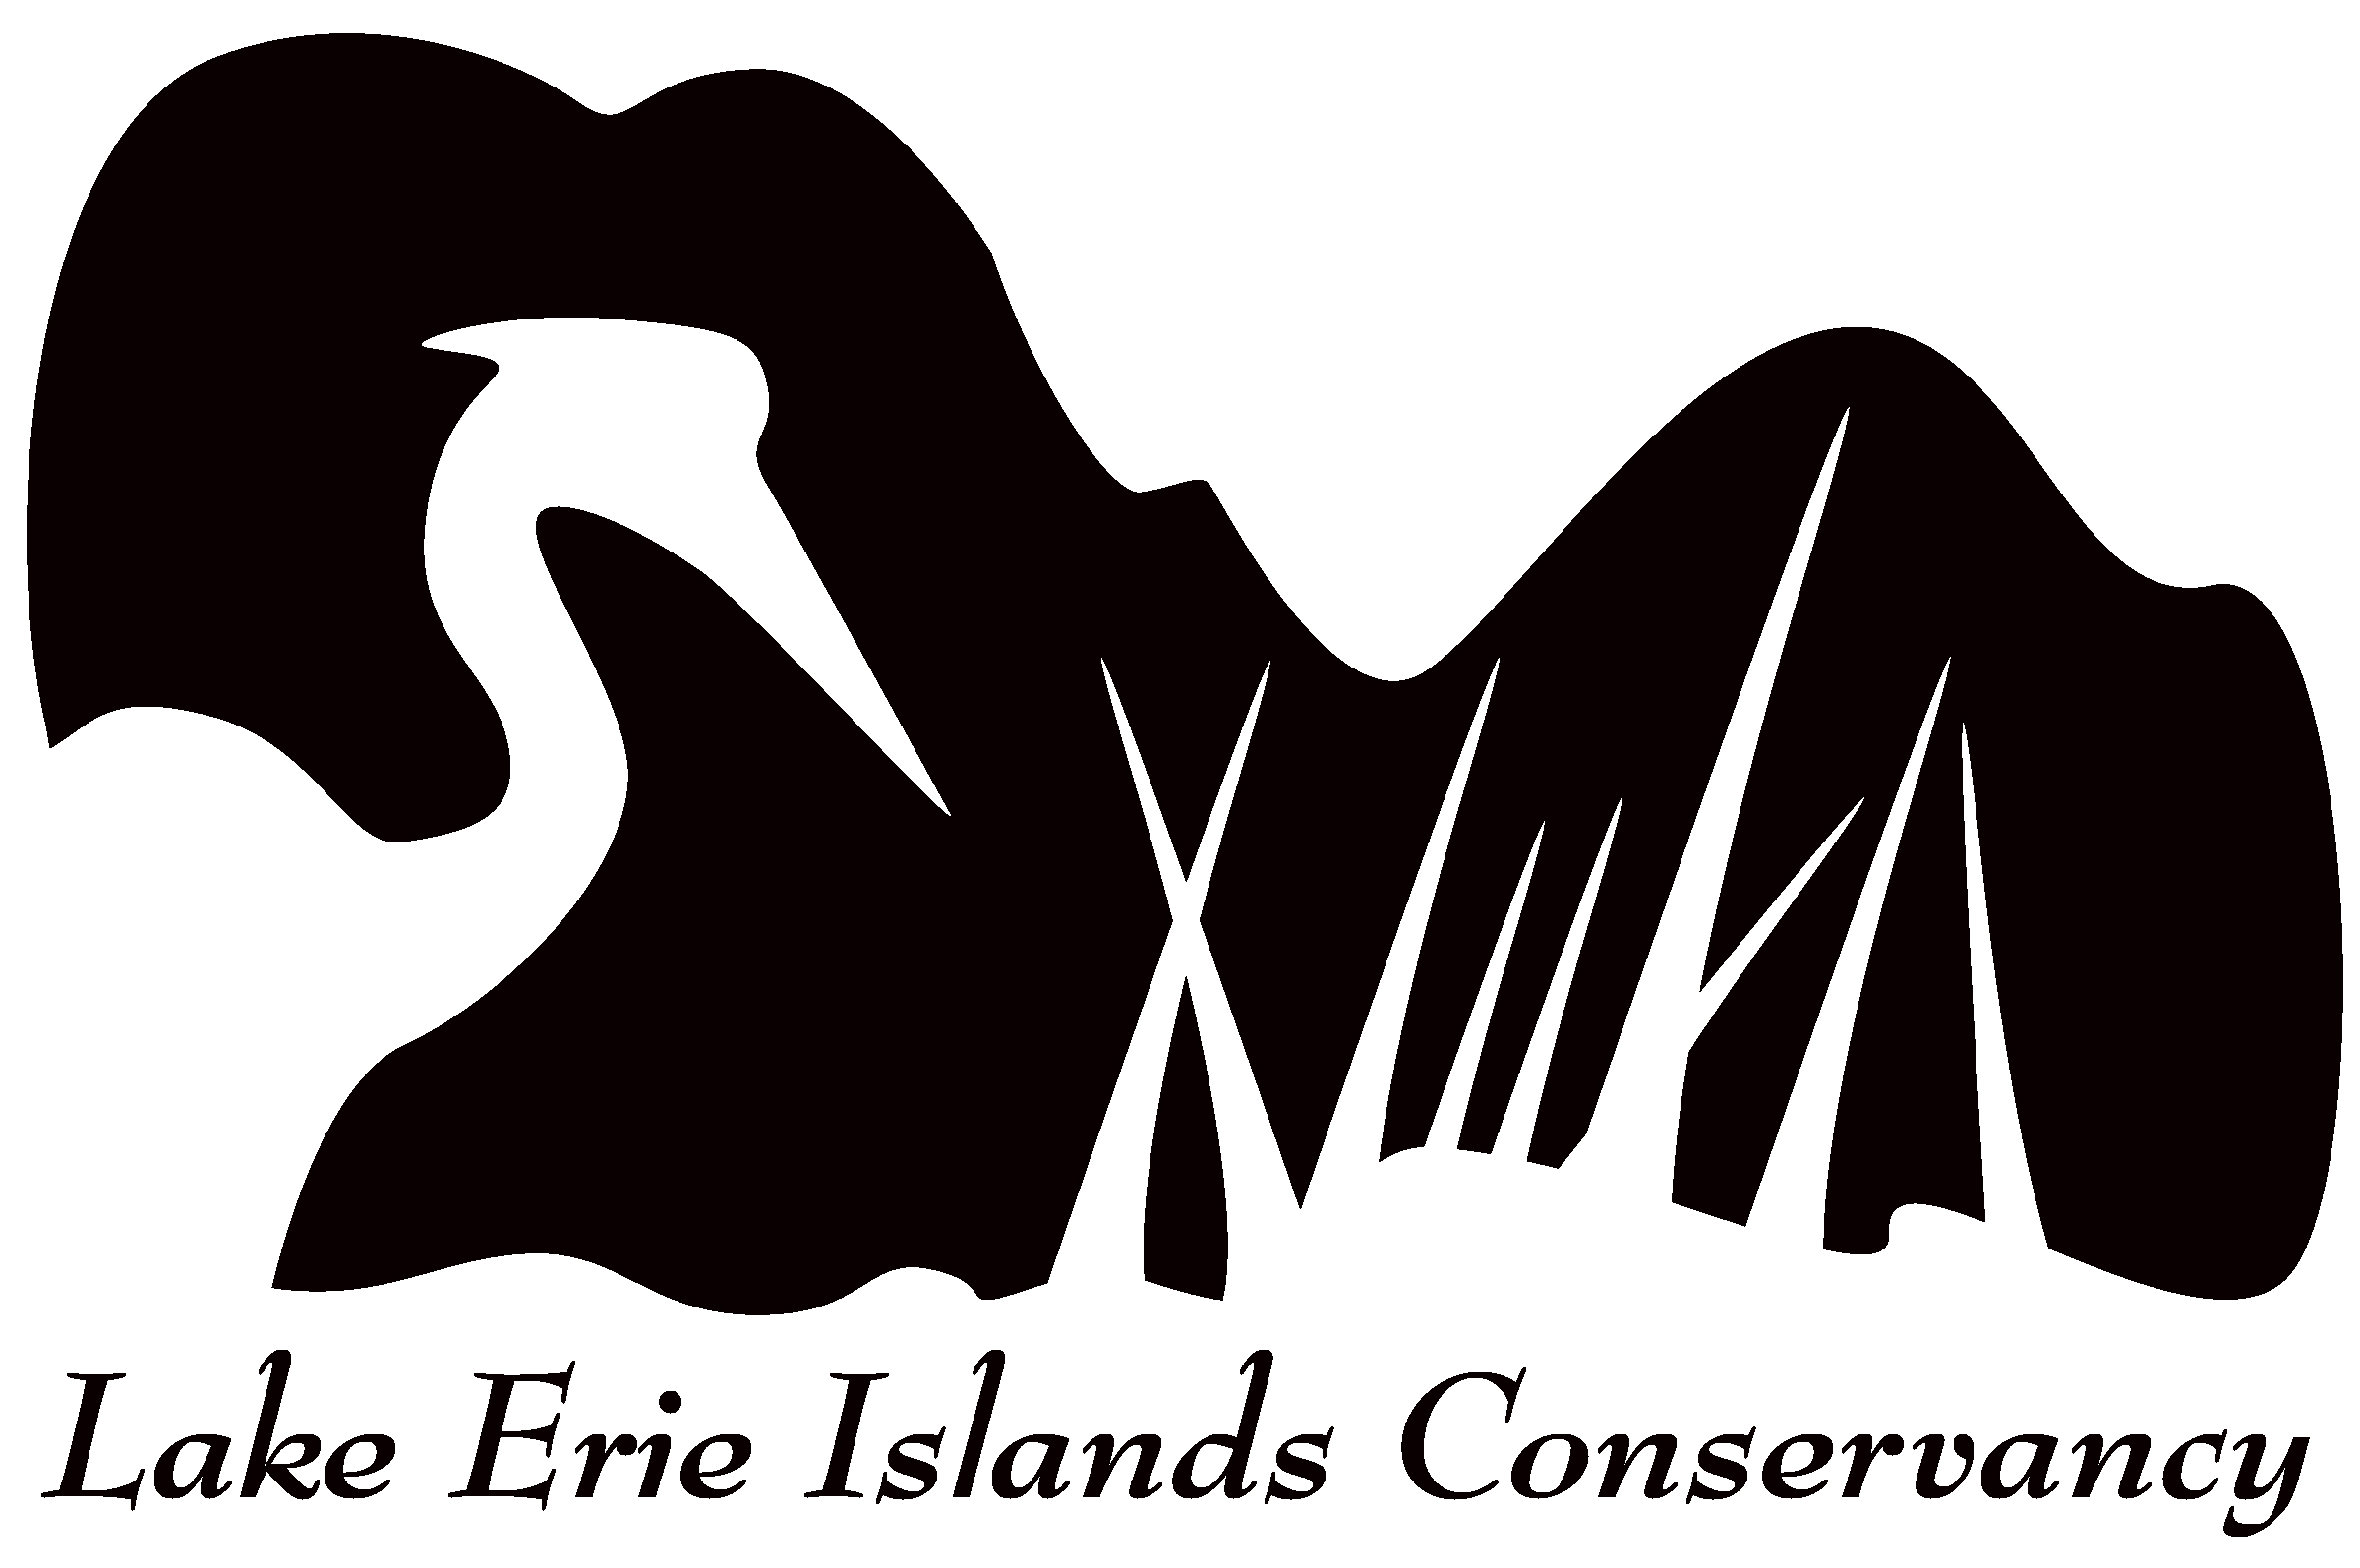 LEI-Conservancy logo no bg